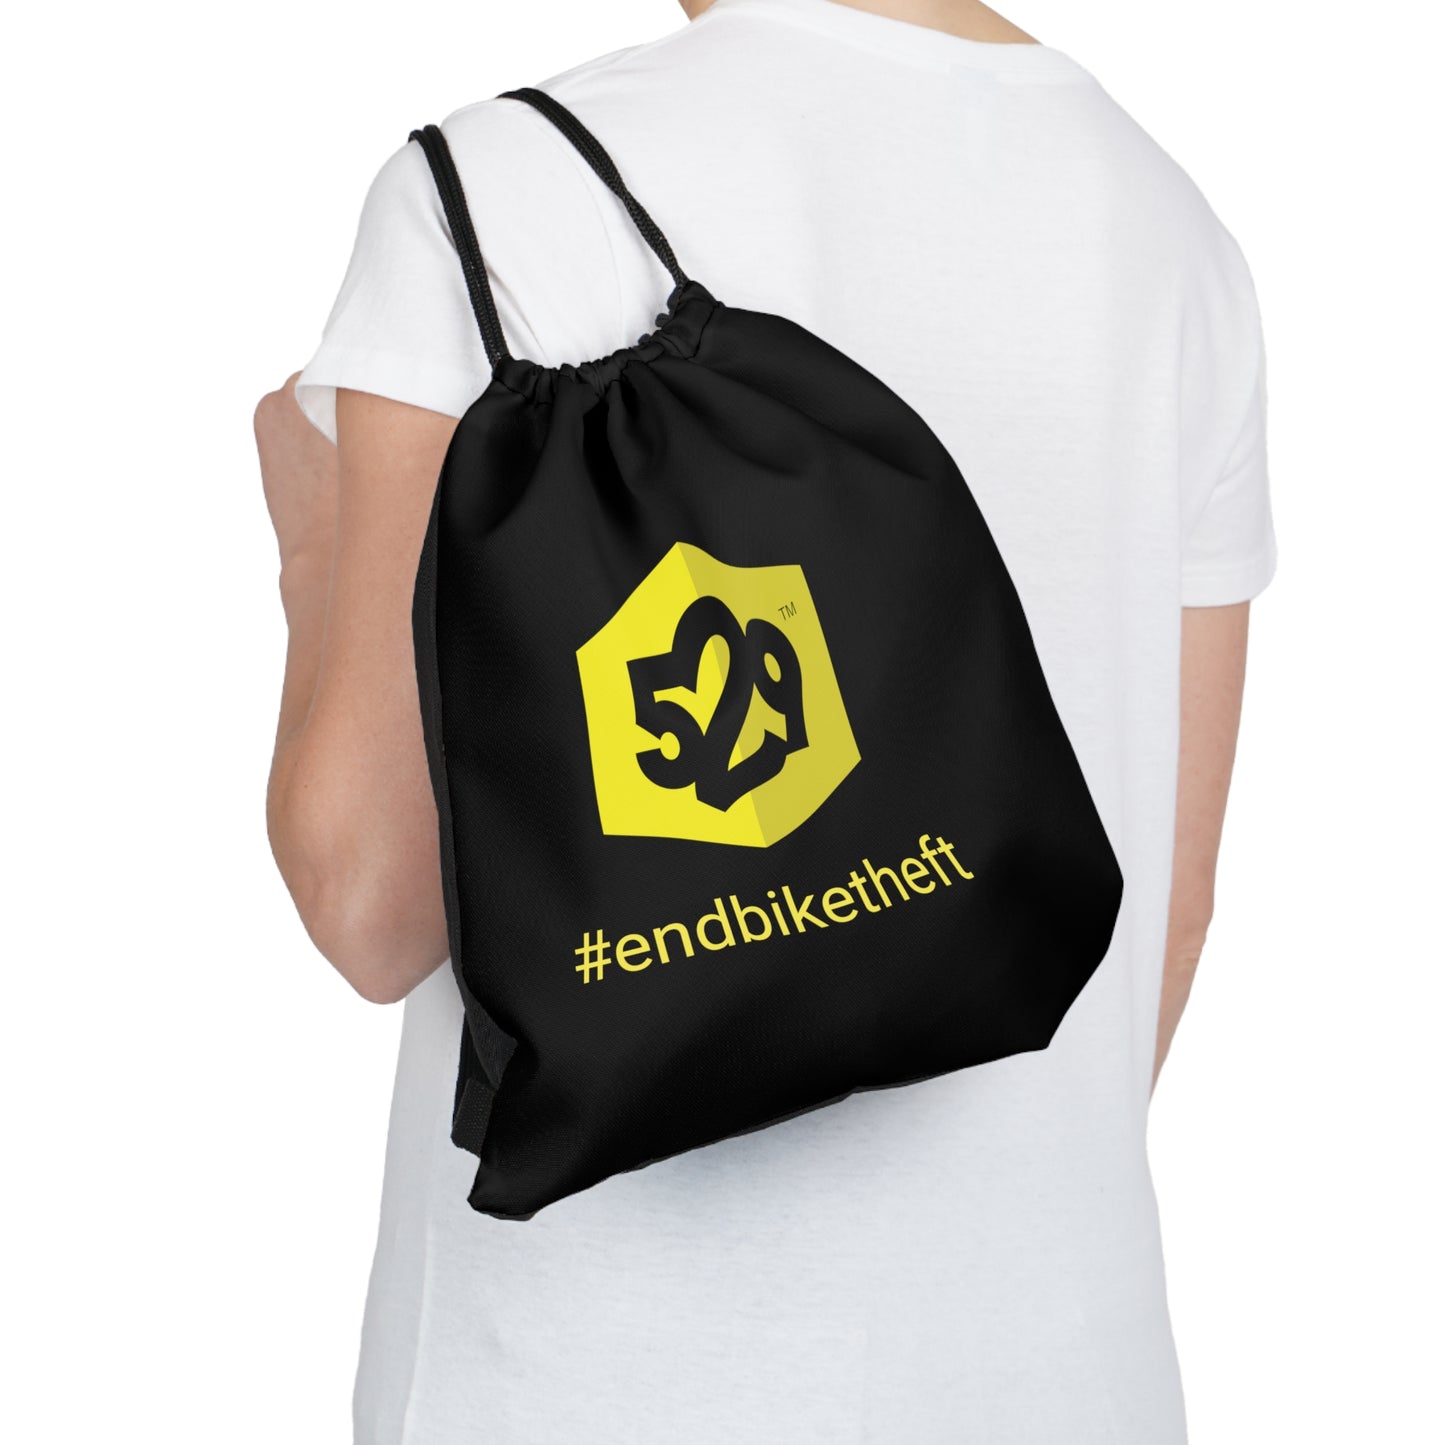 #endbiketheft Outdoor Drawstring Bag